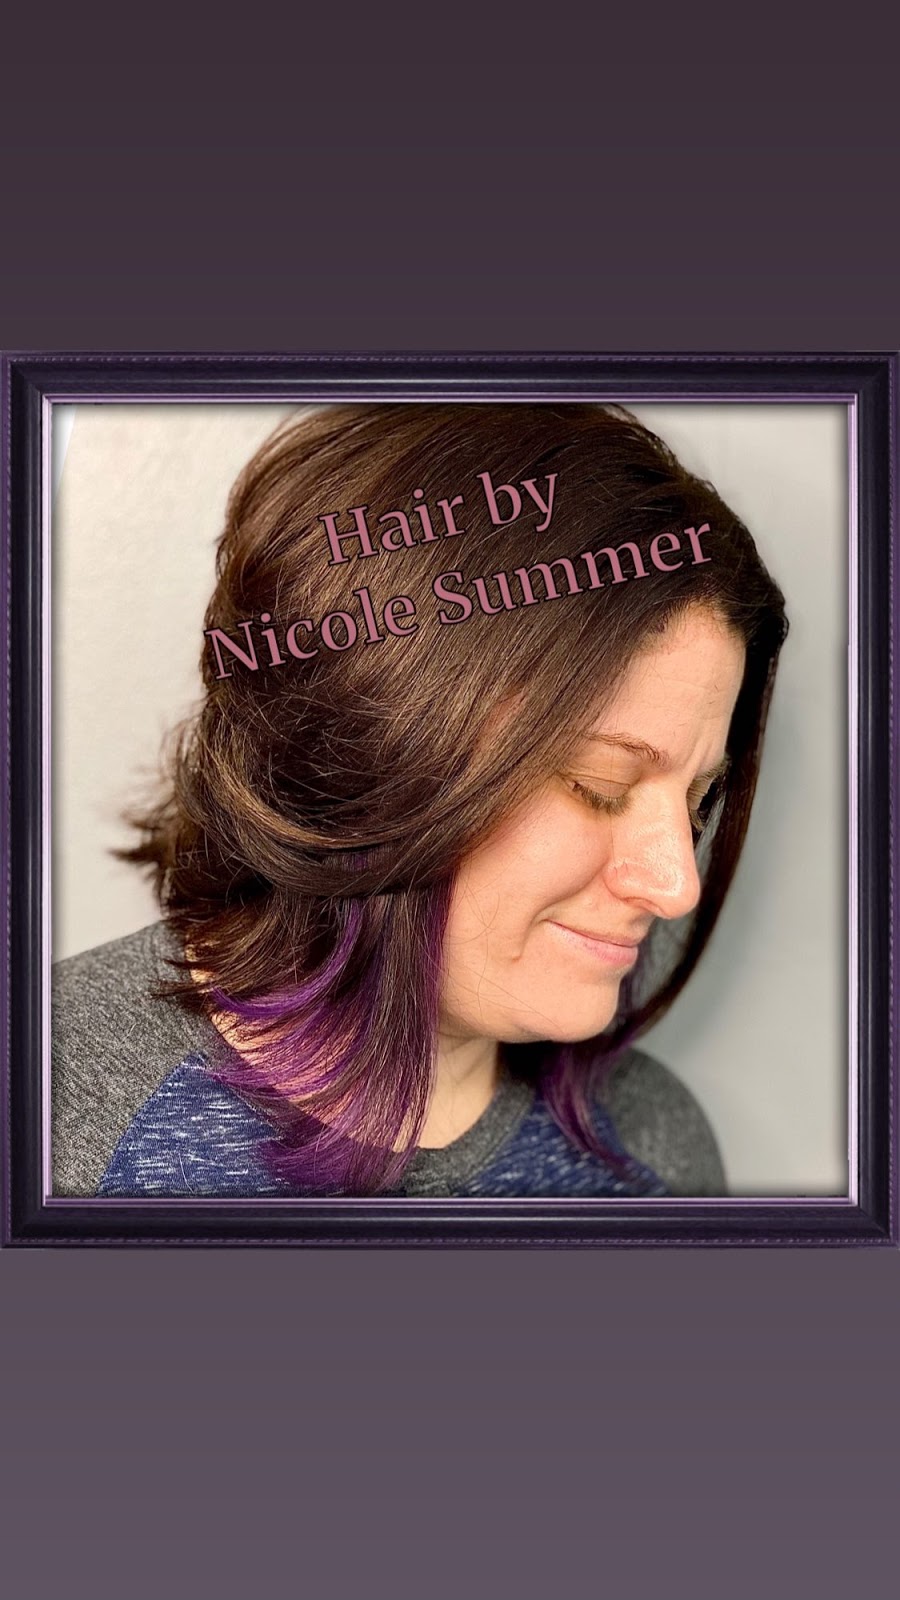 Hair by Nicole Summer, LLC | 892 N State St, Lockport, IL 60441, USA | Phone: (815) 341-4092